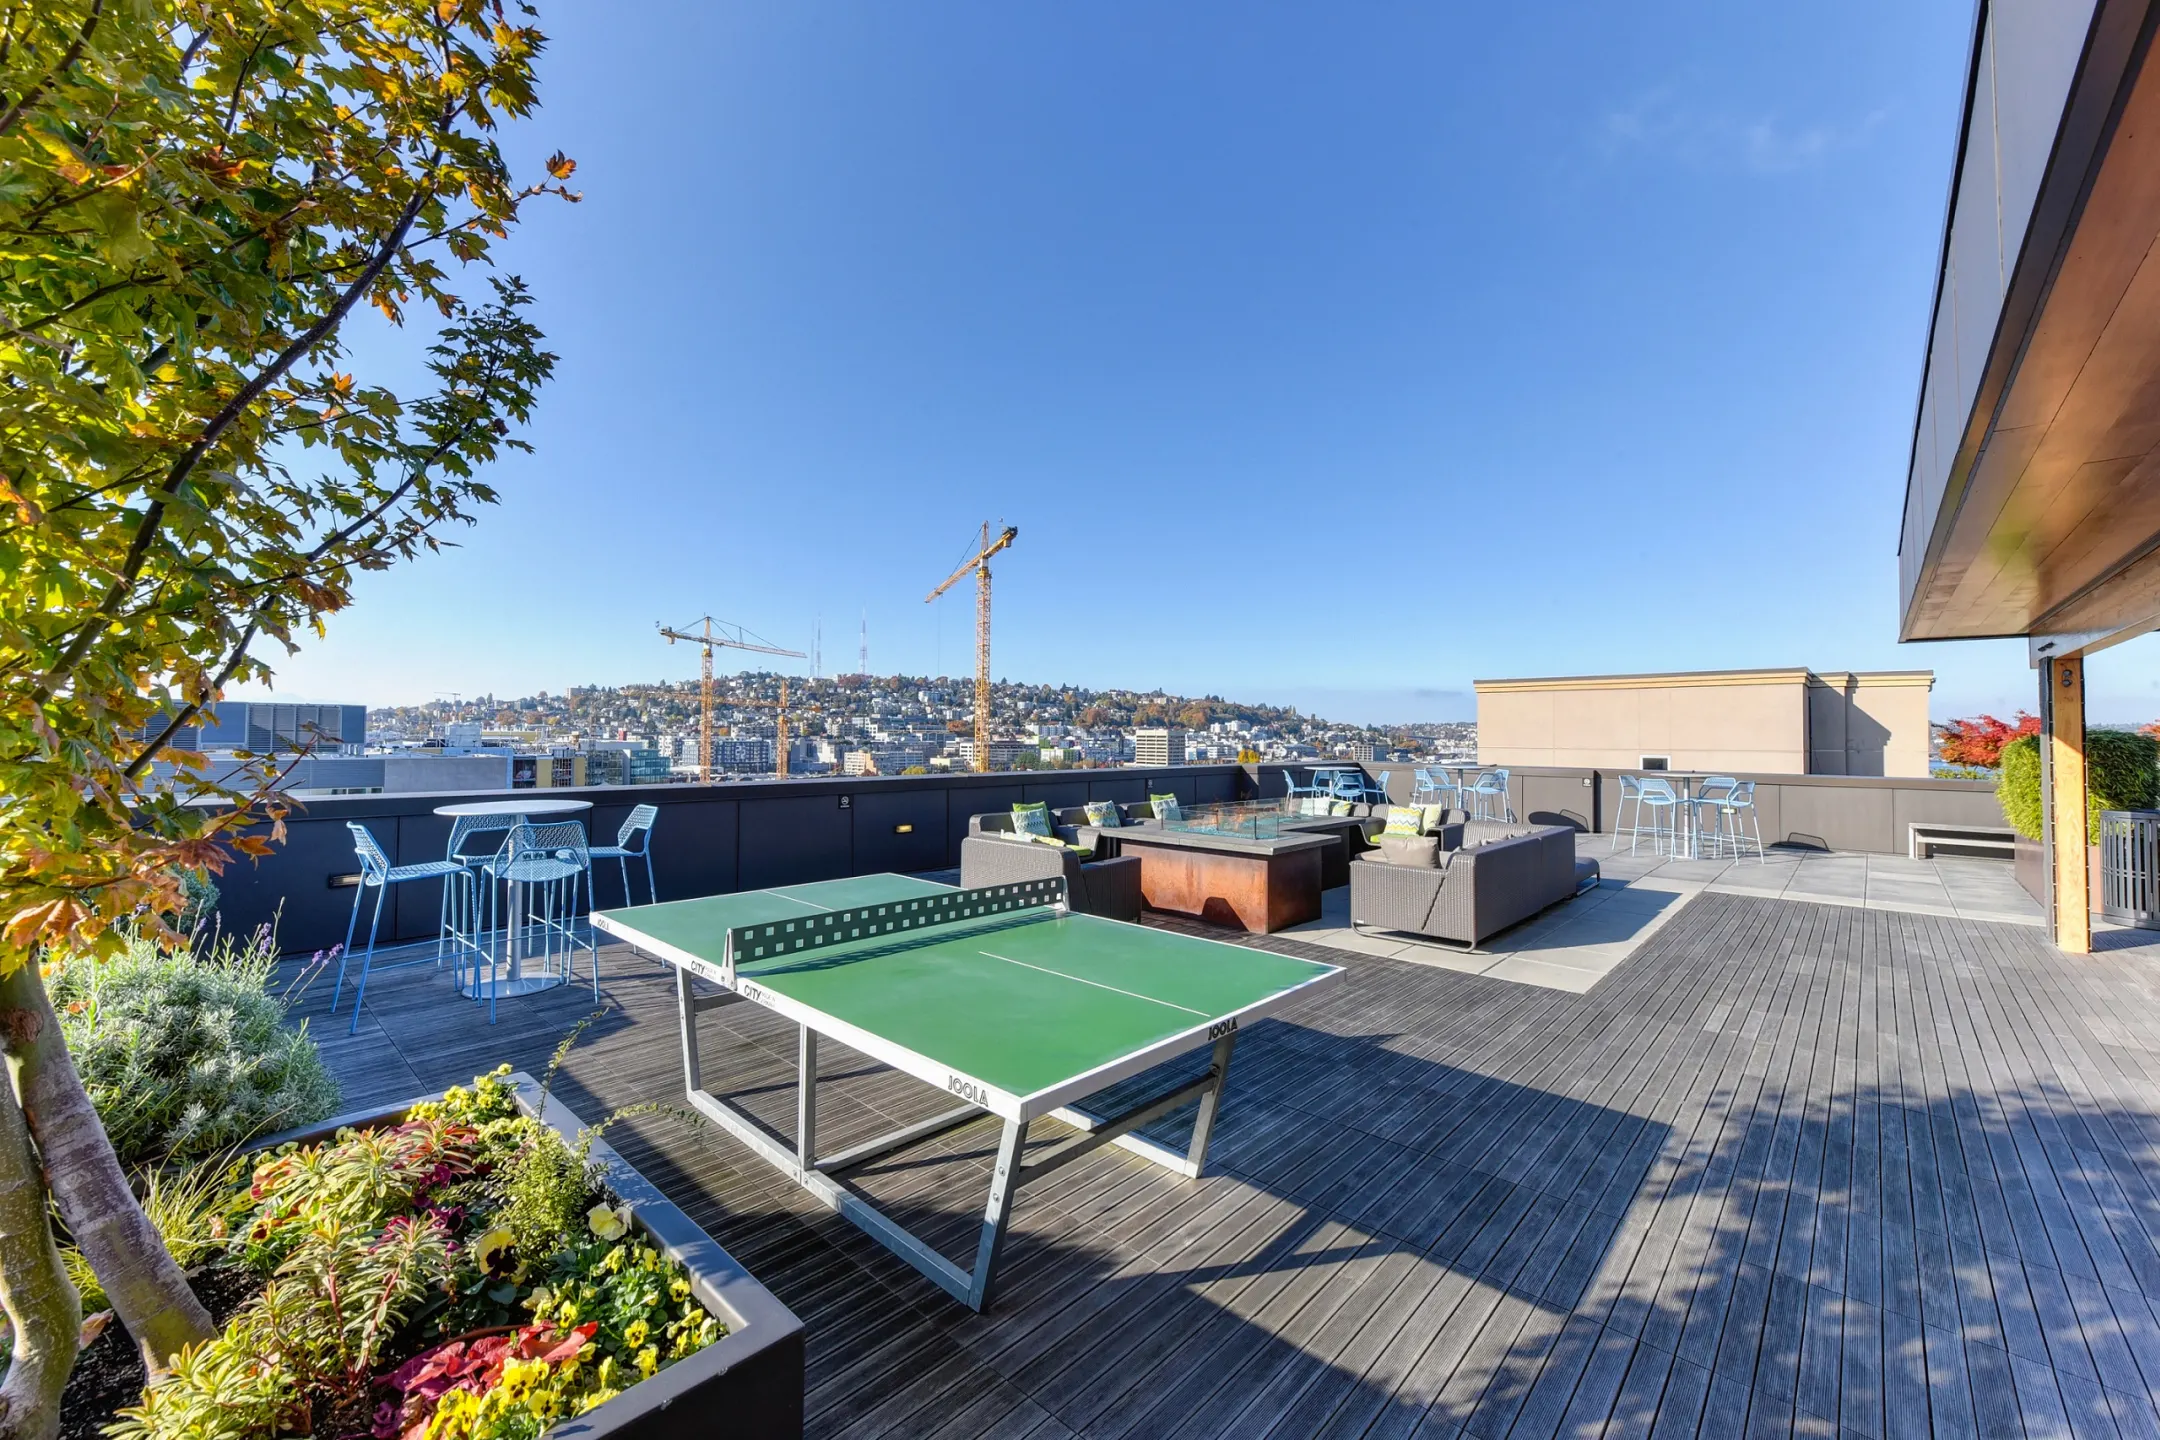 Pool - Rivet Apartments - Seattle, WA